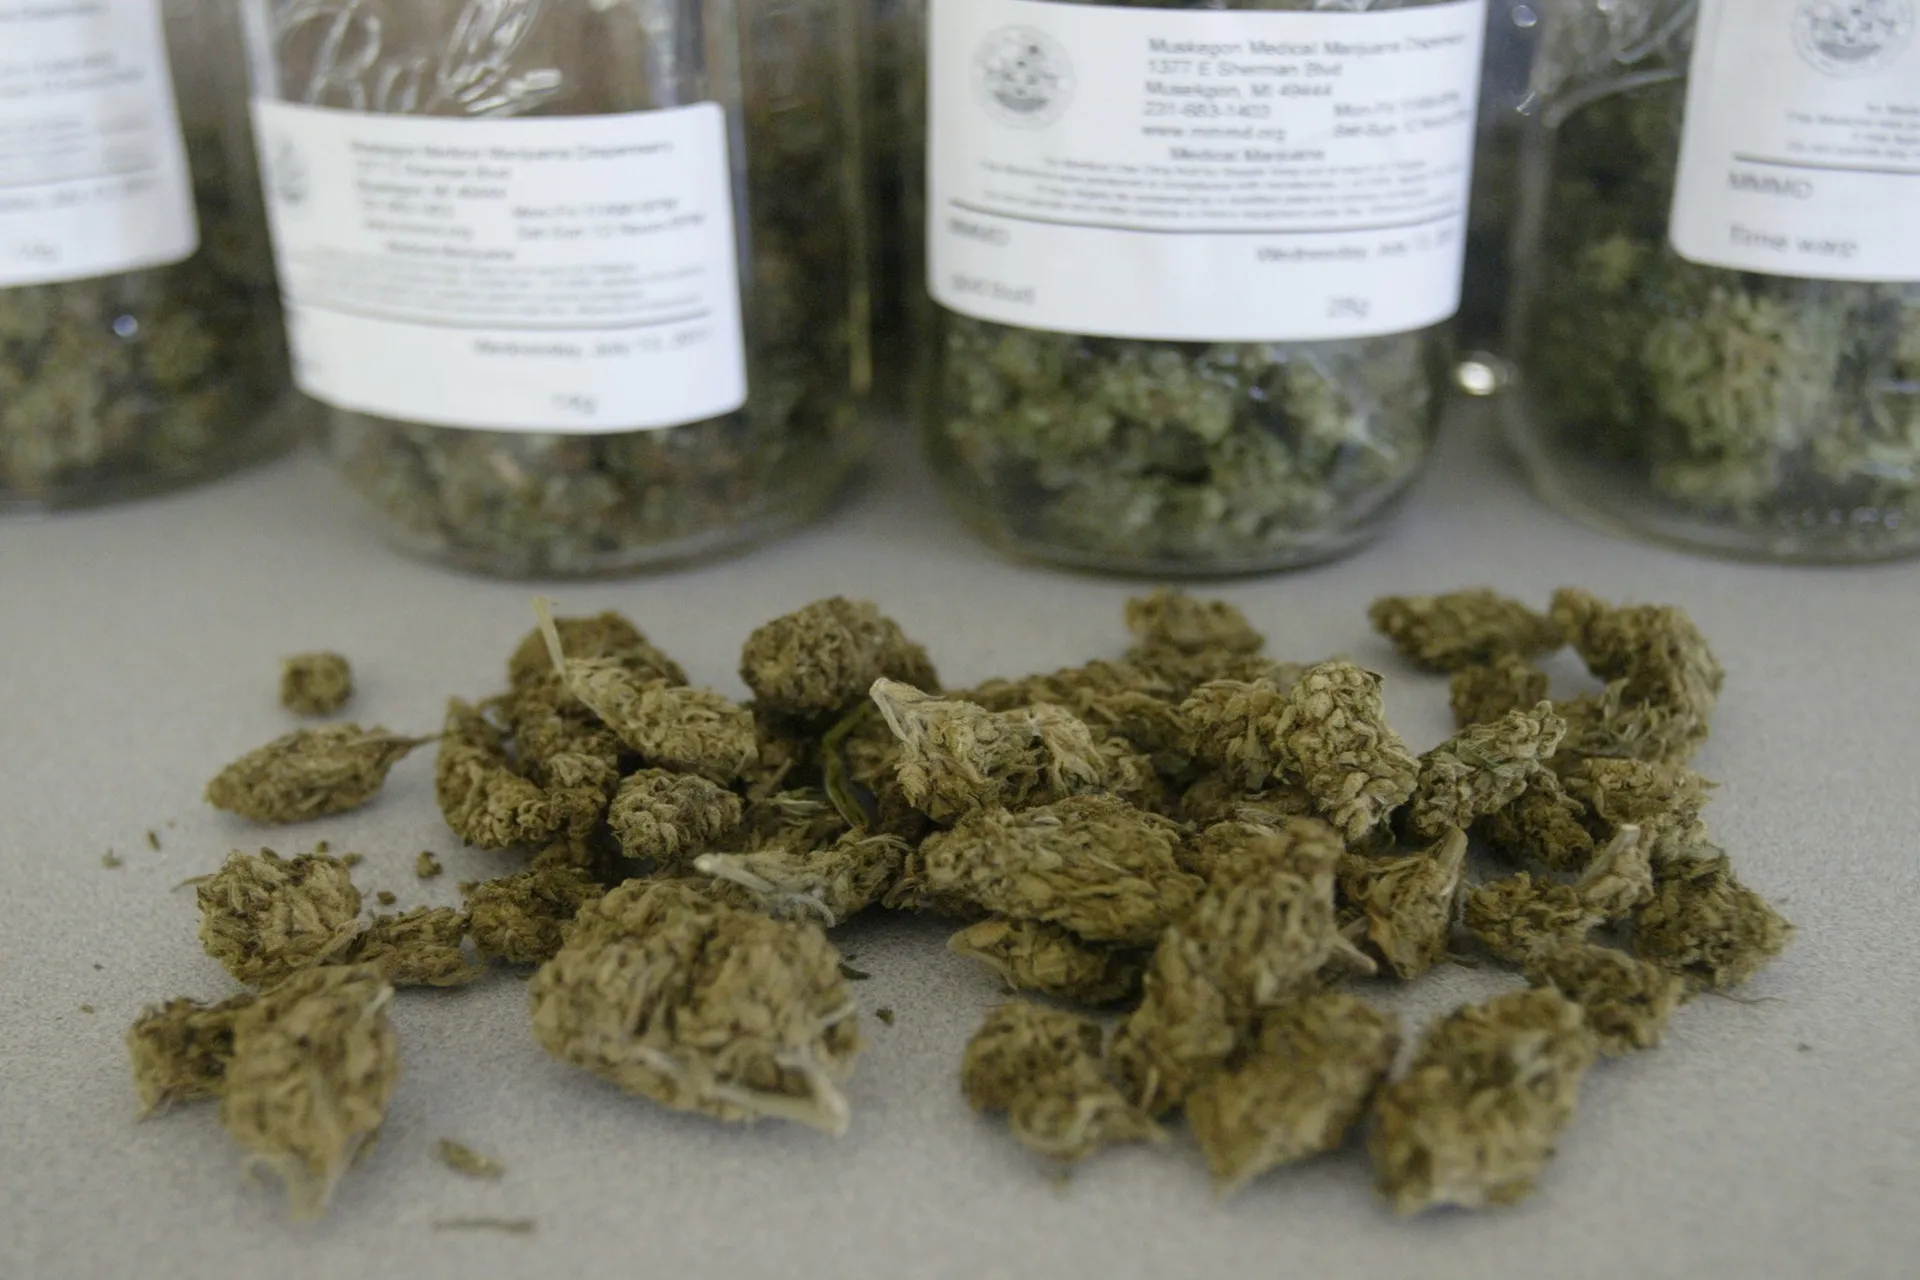  A Guide to Medical Marijuana in Michigan: The Healing Path